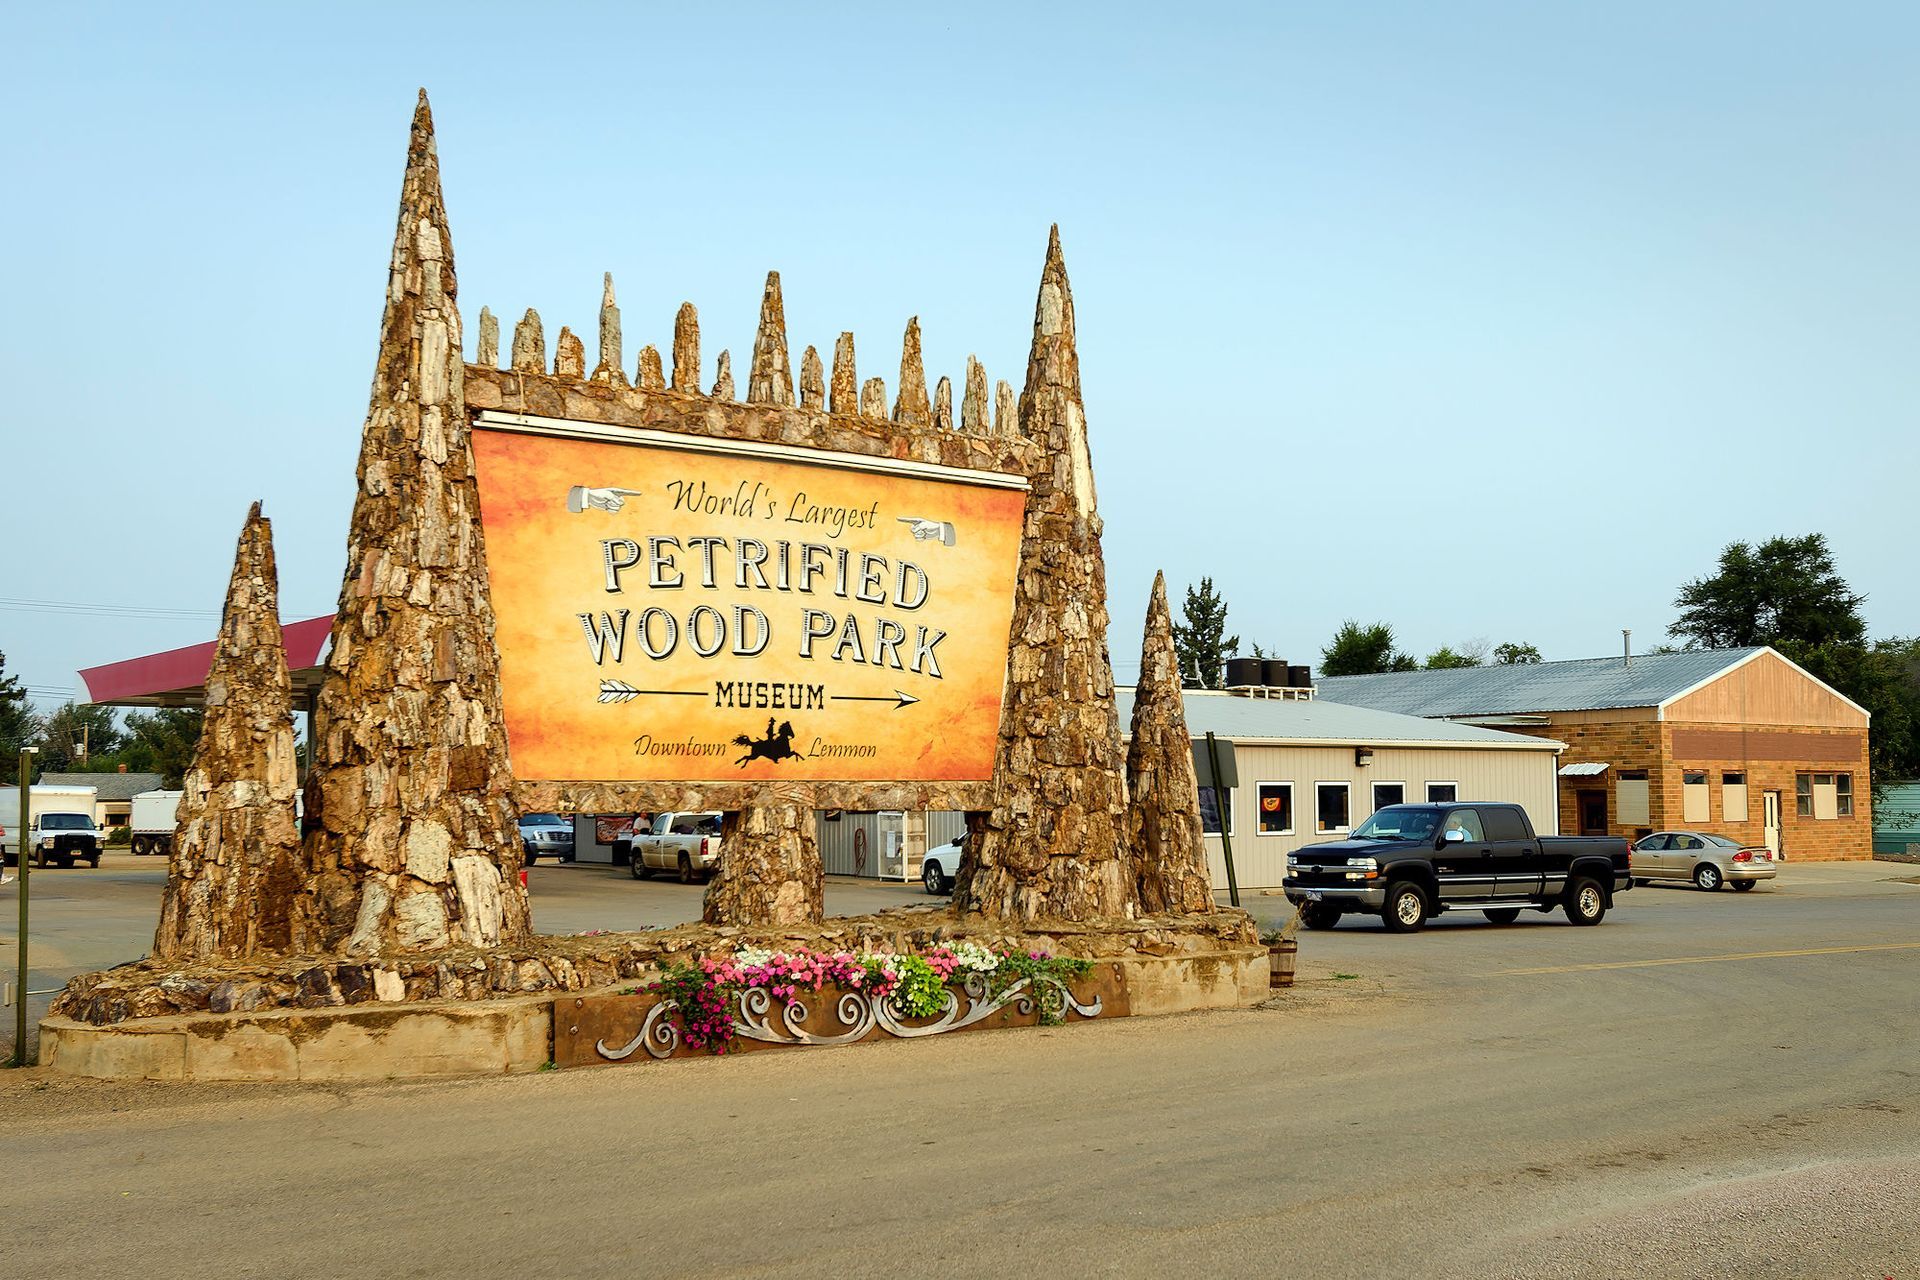 World's Largest Petrified Wood Park, world record in Lemmon, South Dakota
